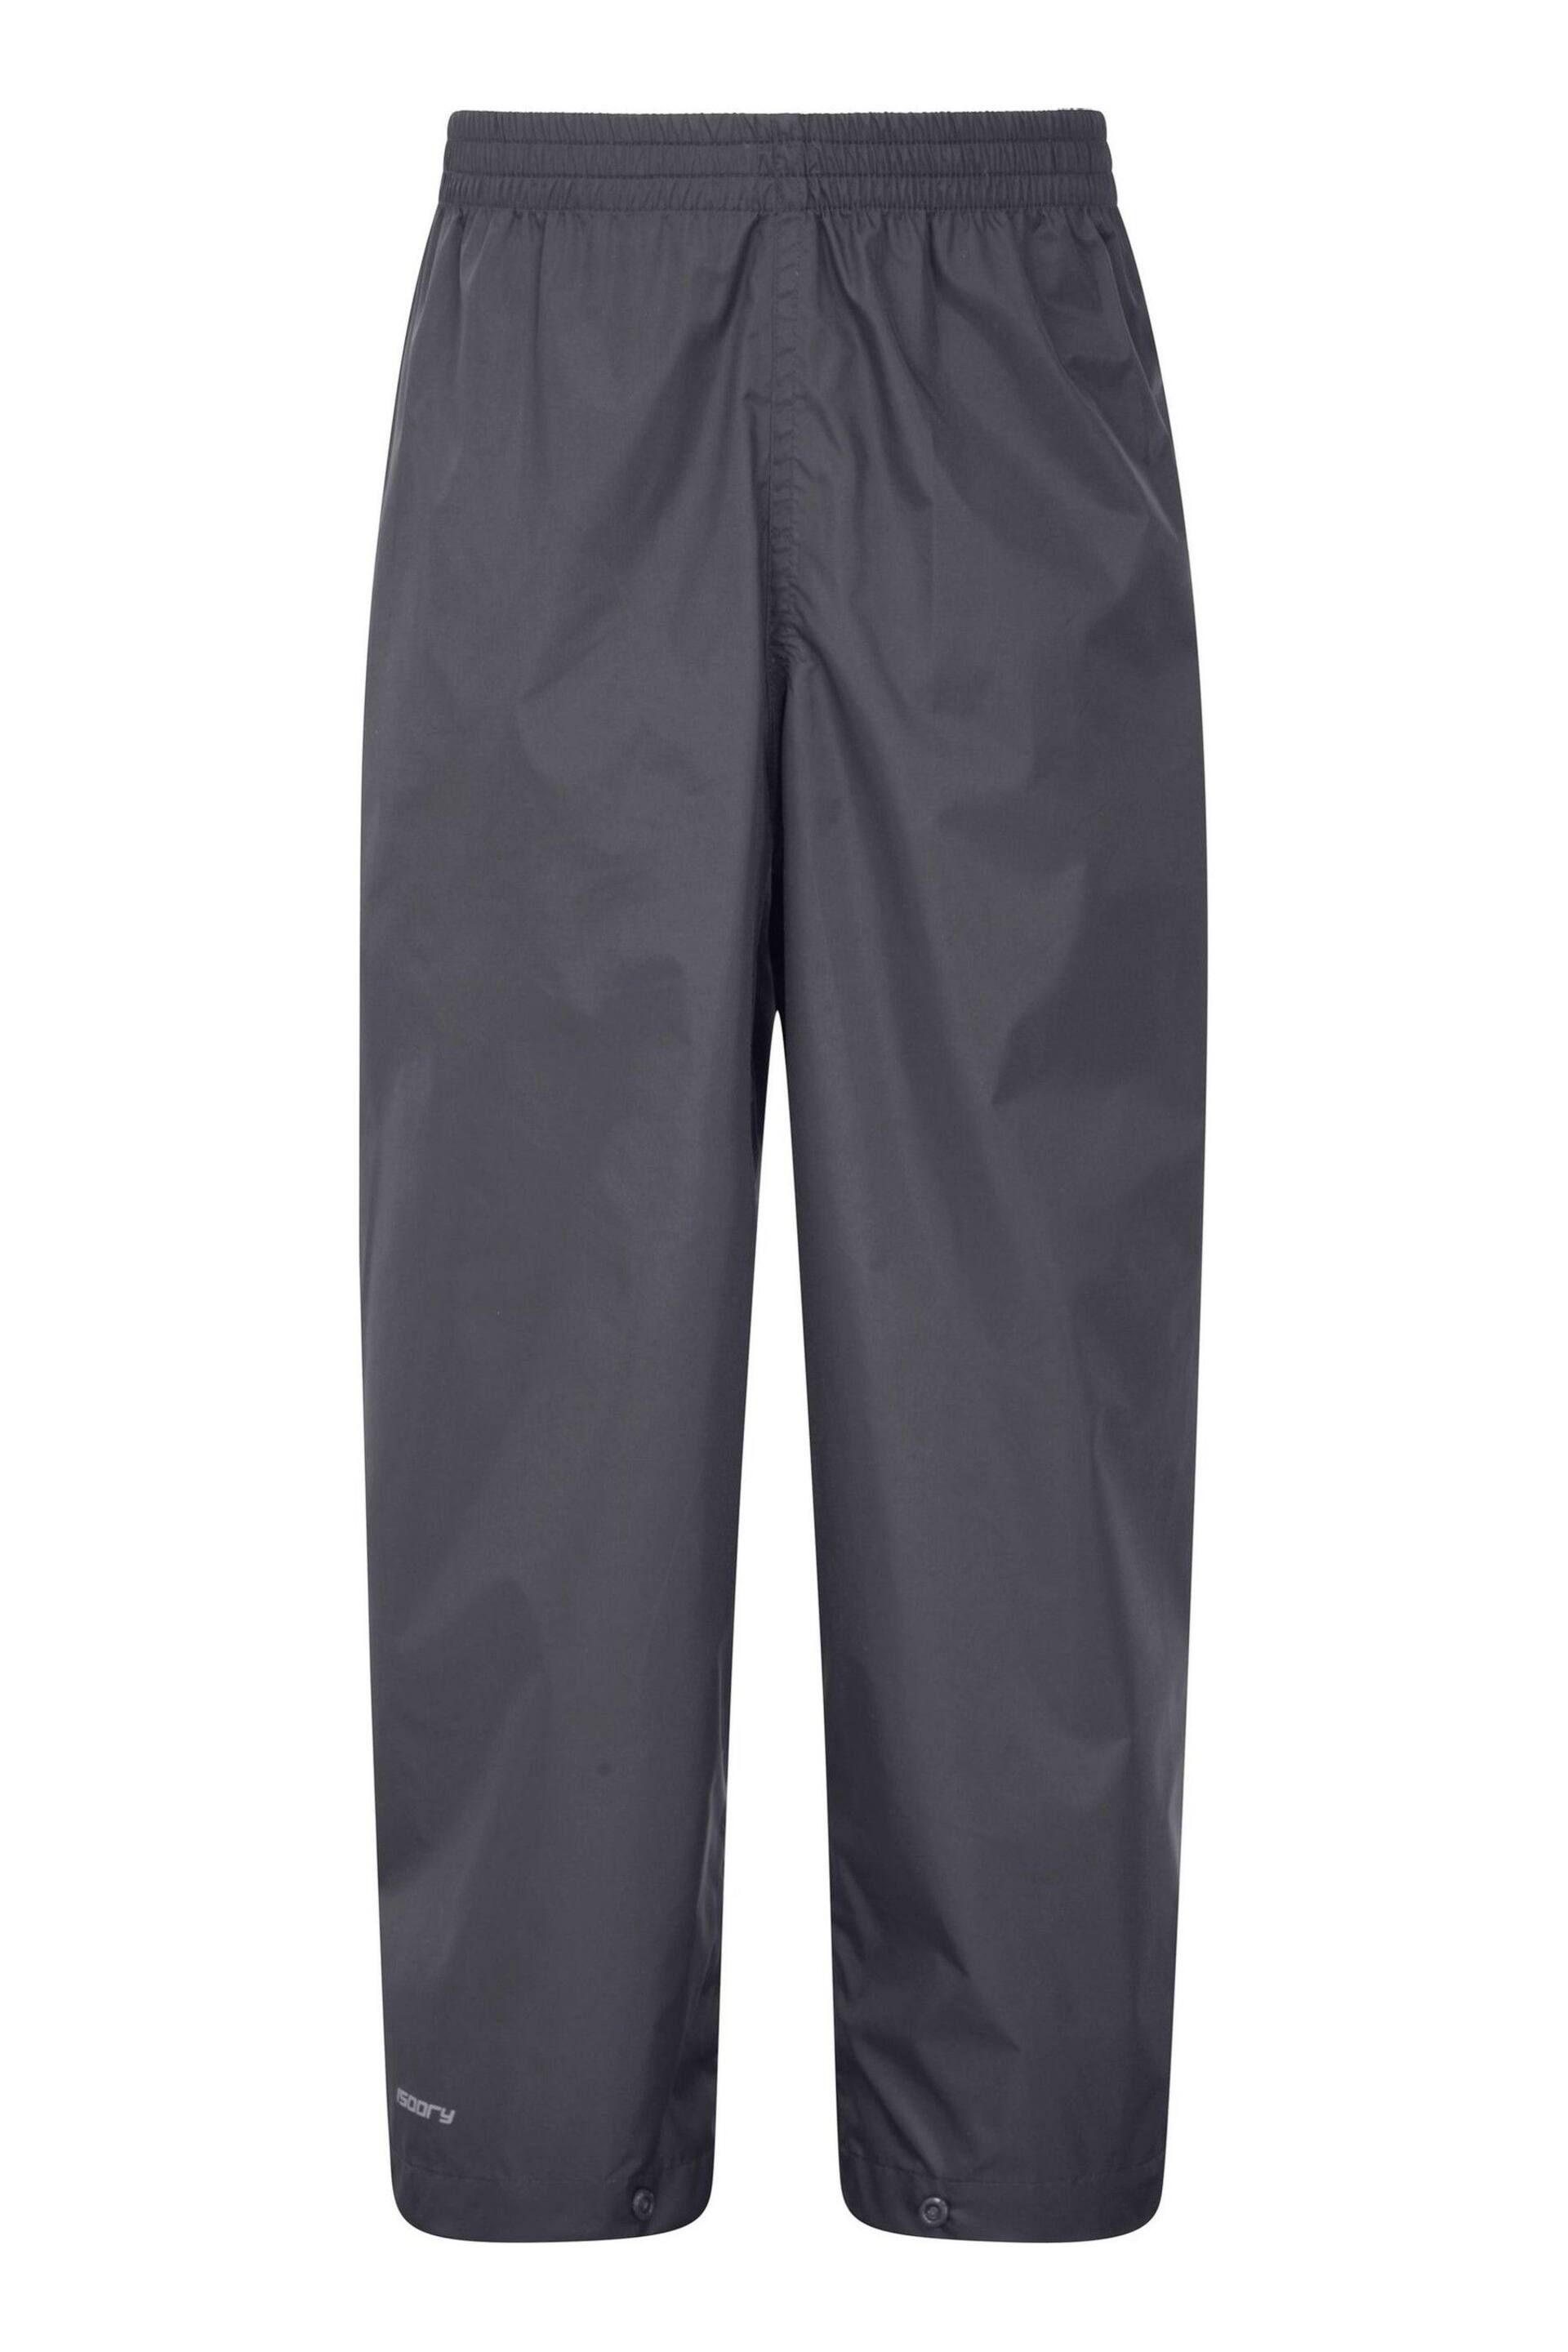 Mountain Warehouse Grey Pakka Kids Waterproof Over Trousers - Image 1 of 5